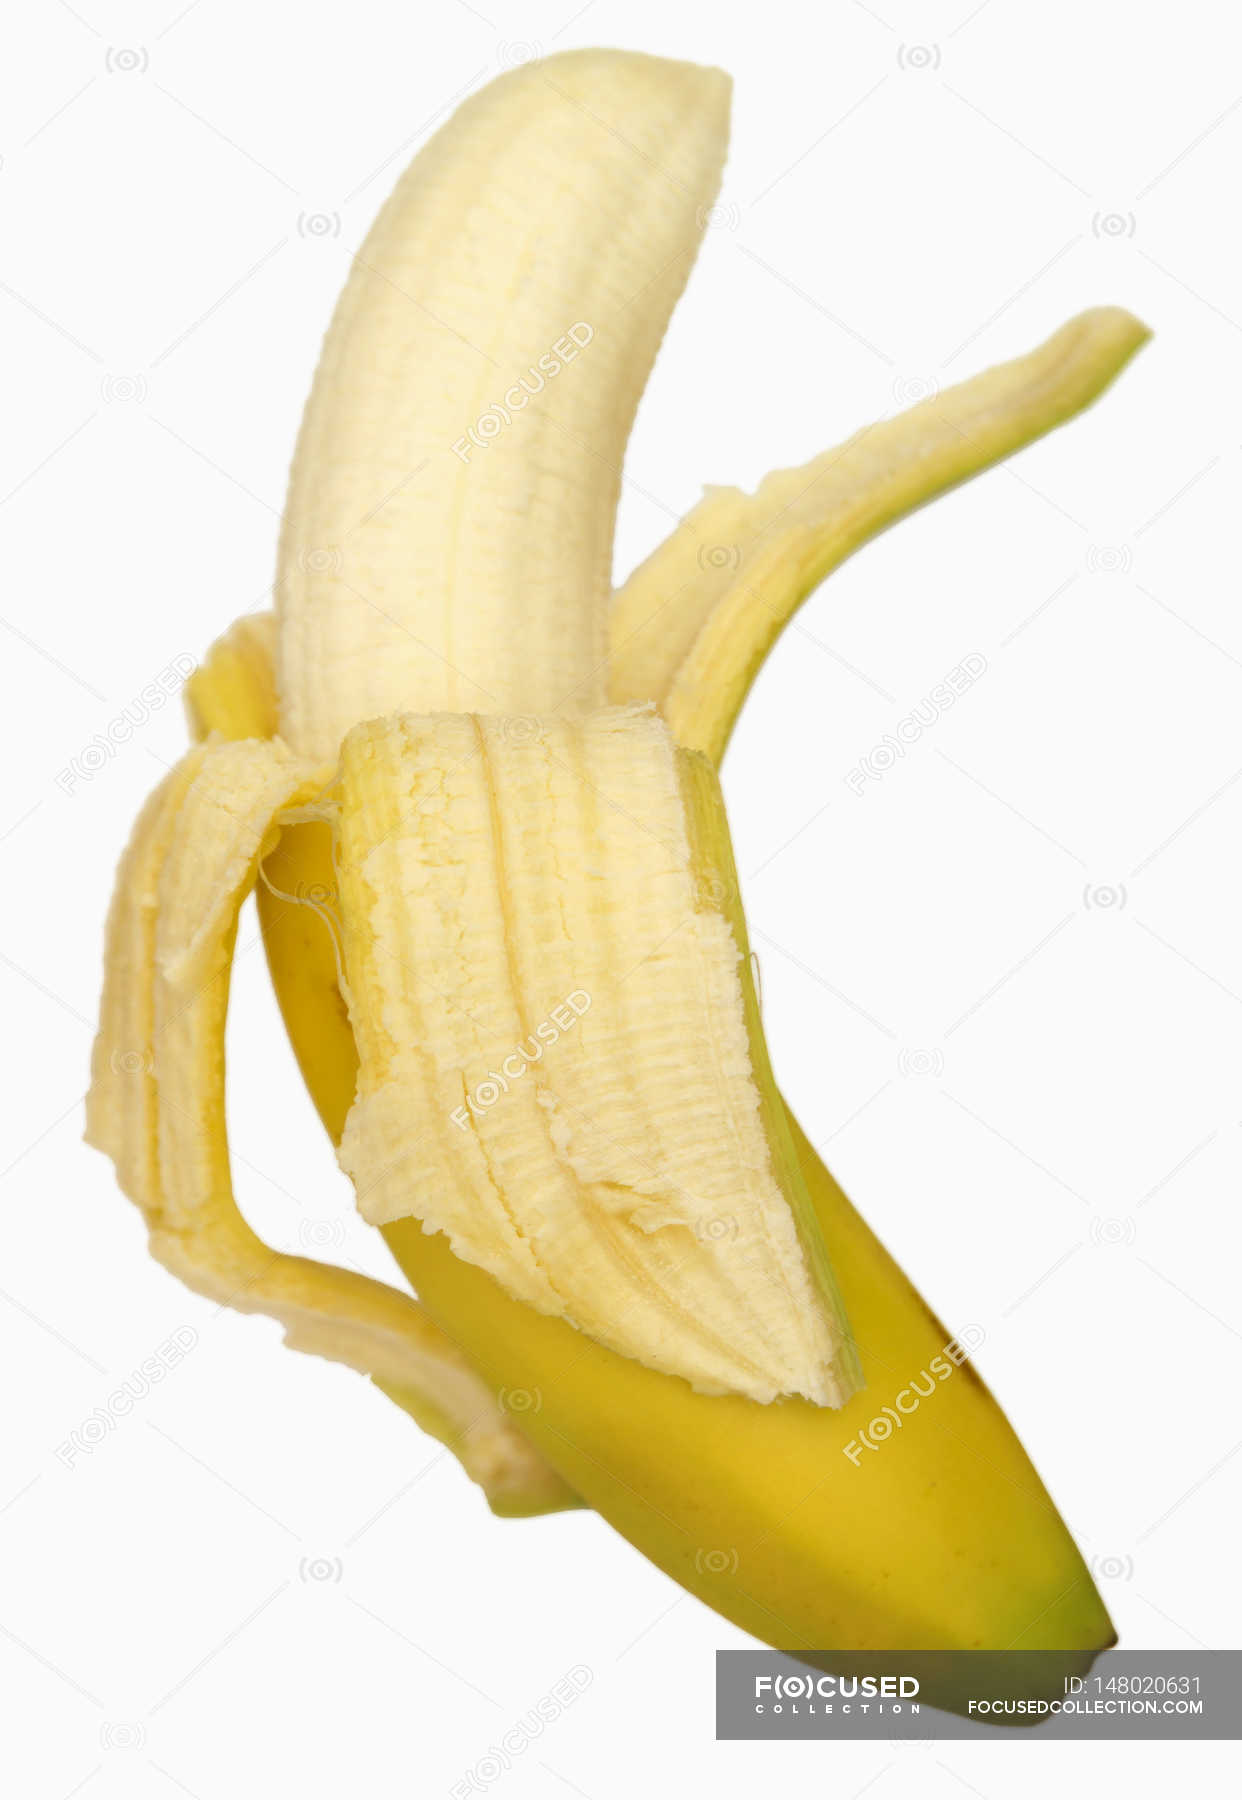 half peeled banana